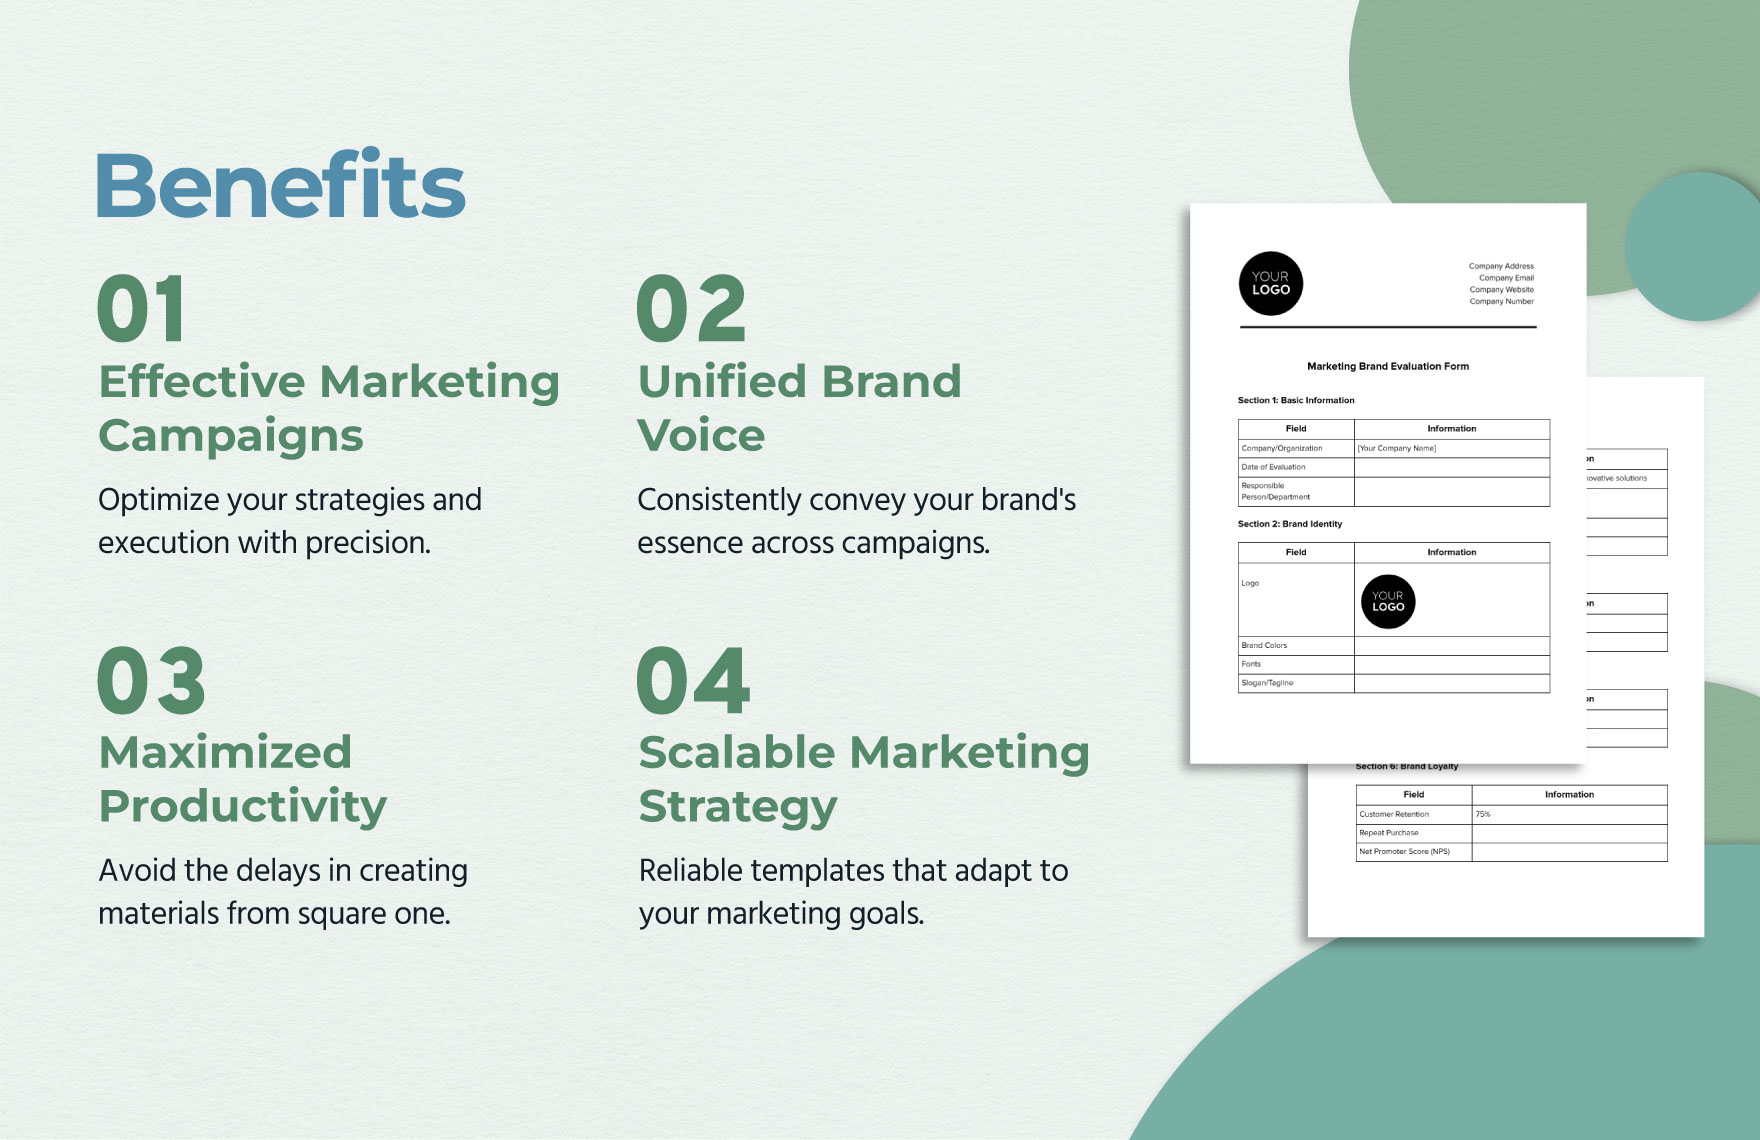 Marketing Brand Evaluation Form Template